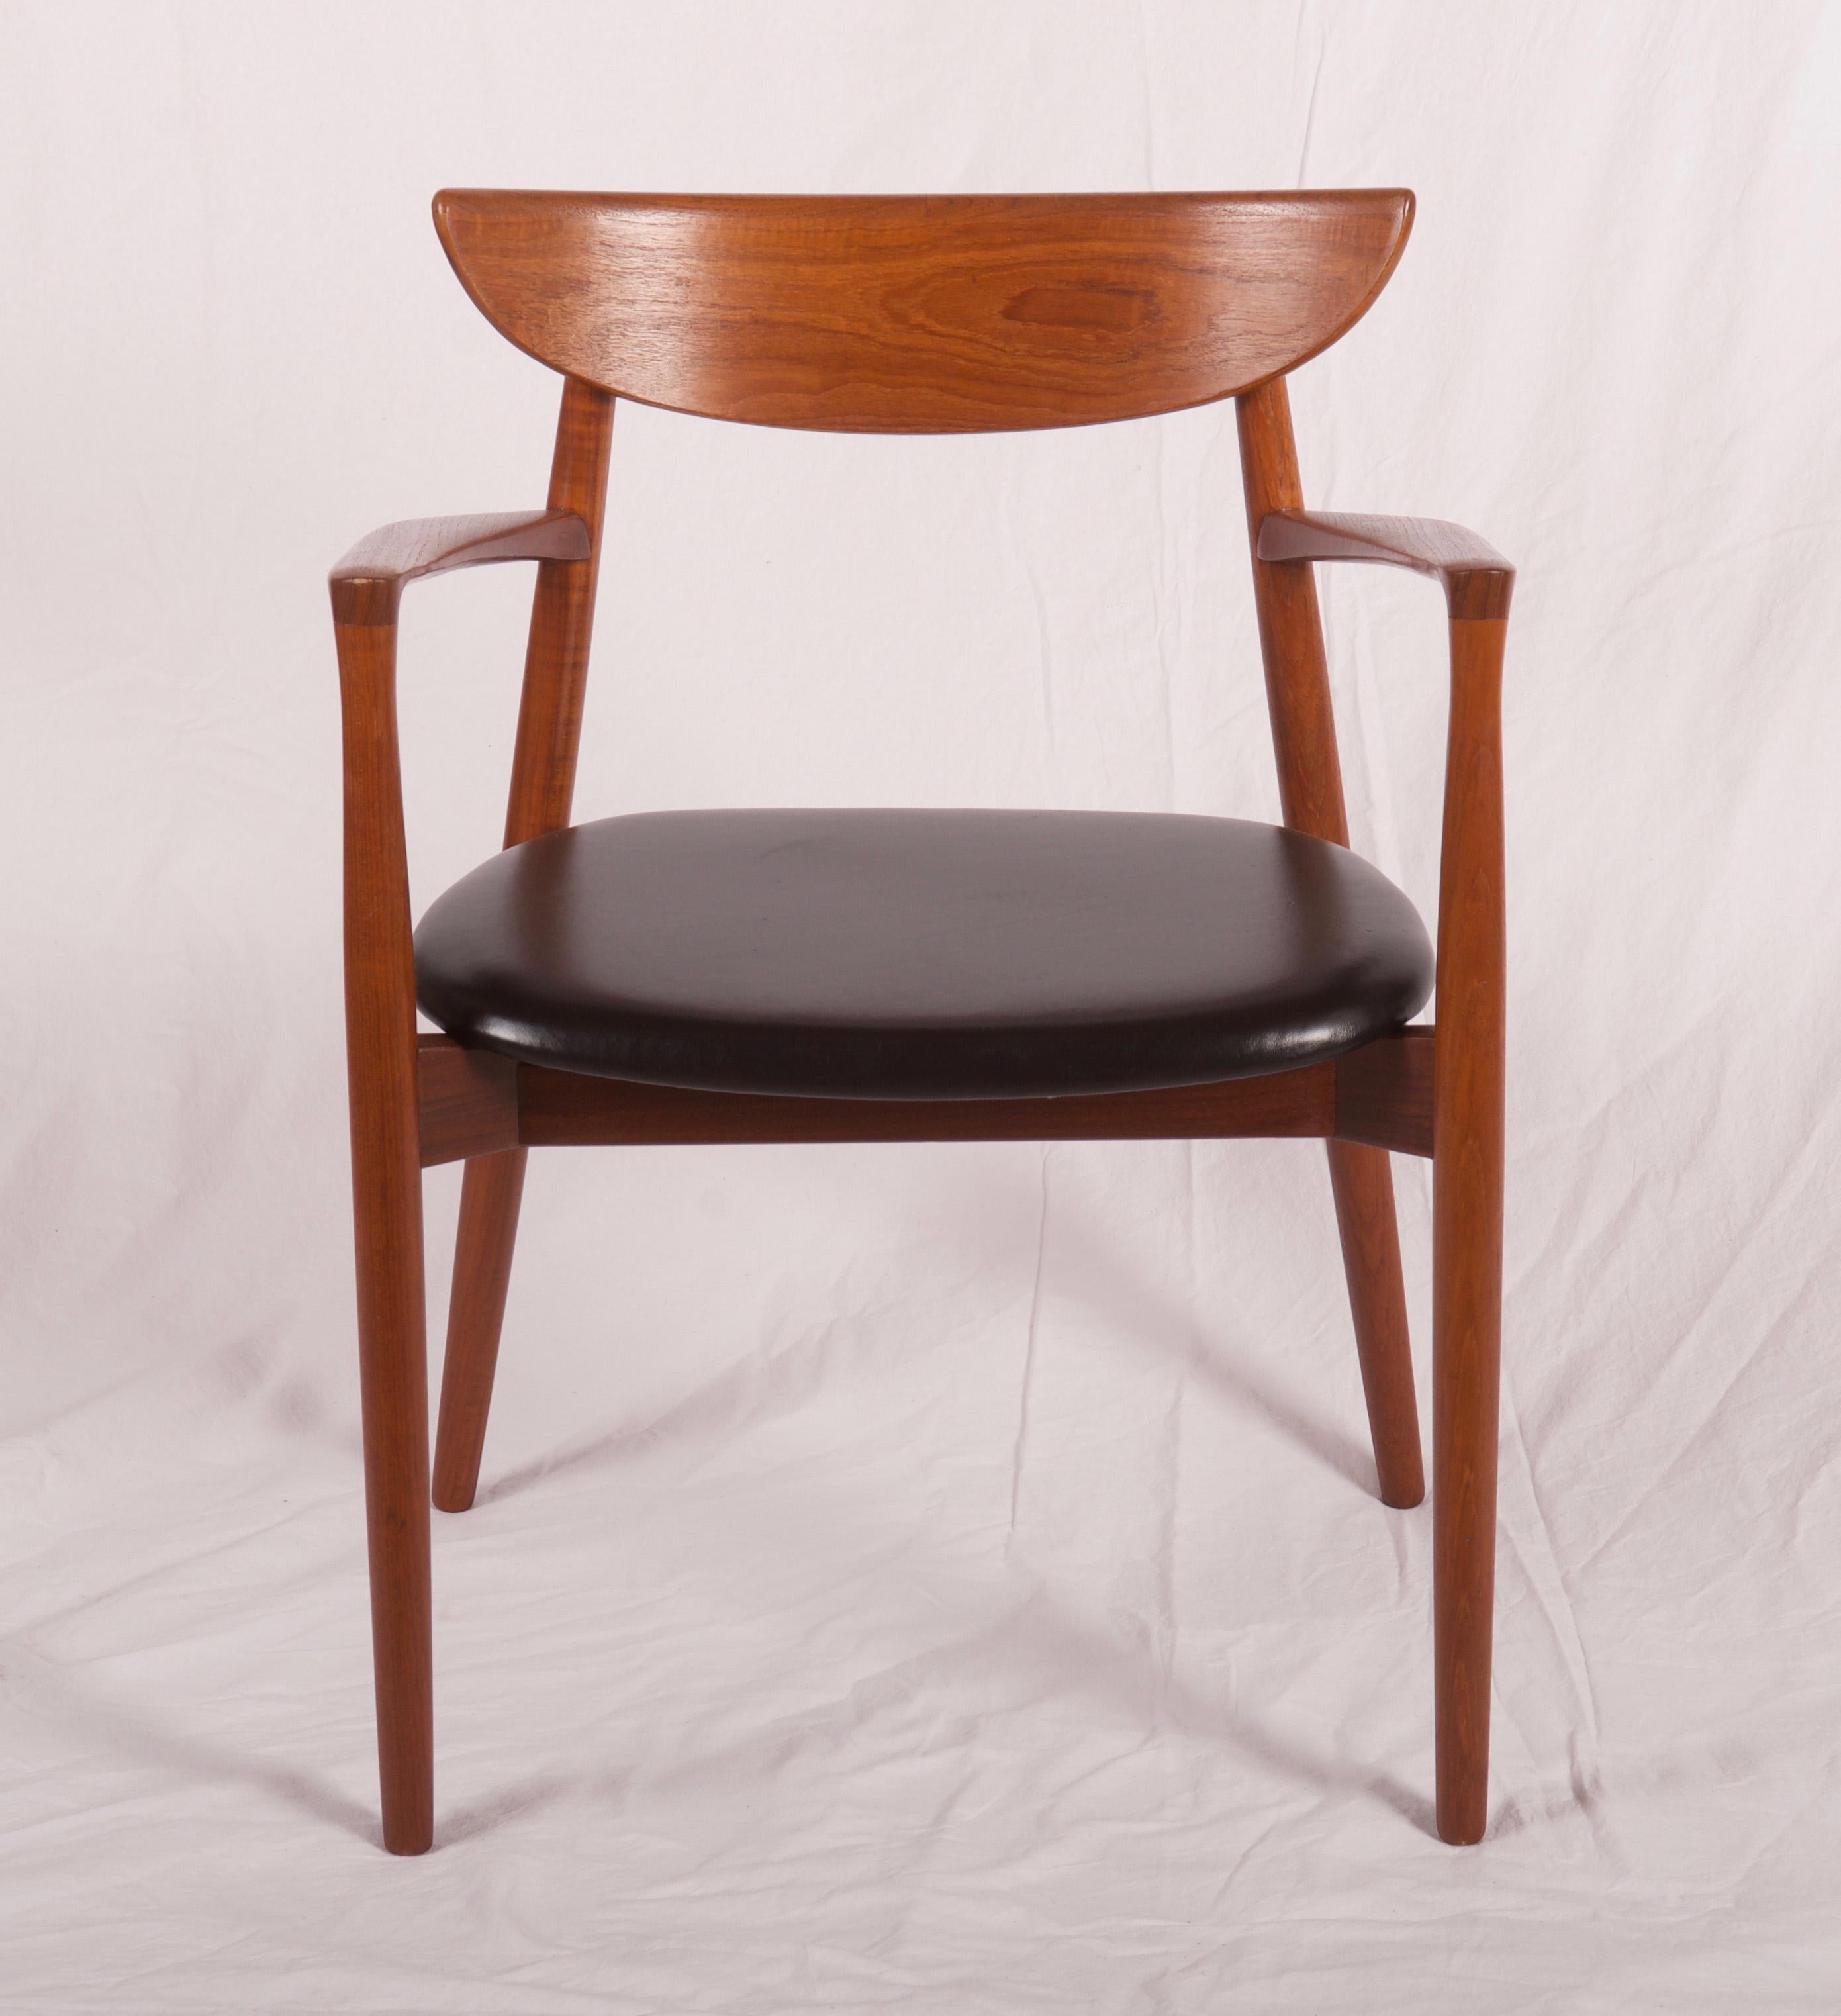 Solid teak frame, seat leather upholstered, model 59. Designed in 1960 By Harry Ostergaard for Randers Møbelfabrik.
Wood fully restored.

 